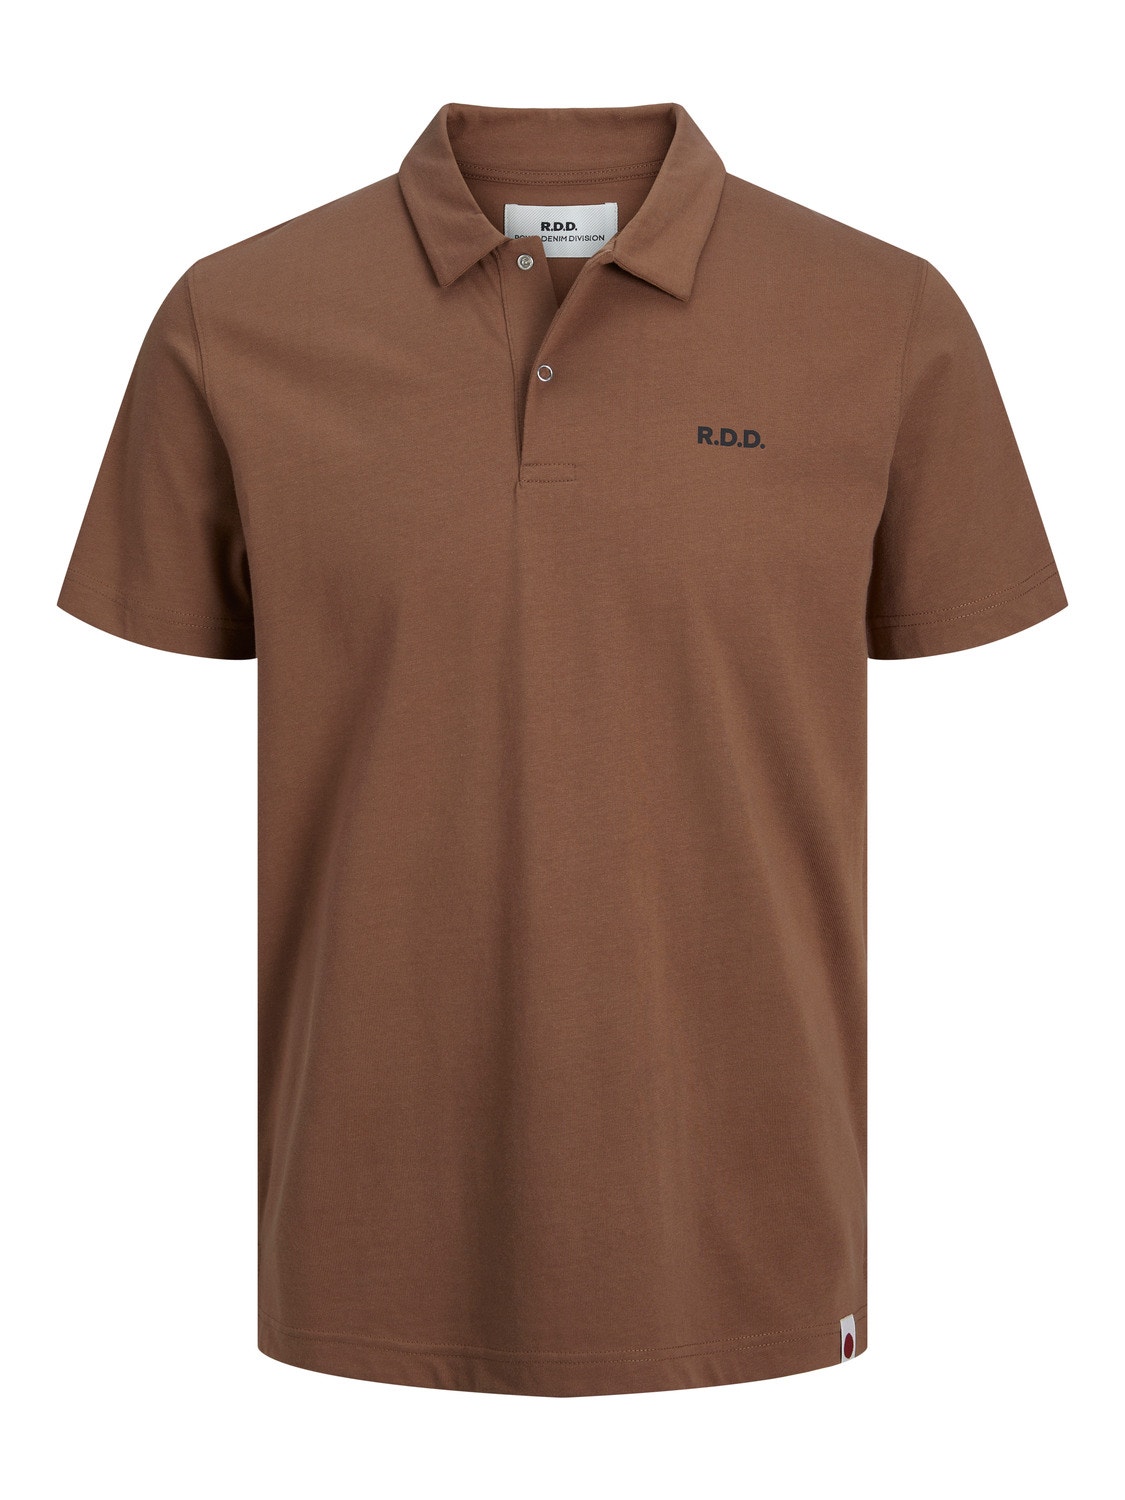 Jack & Jones RDD Logotyp Polo T-shirt -Cocoa Brown - 12232814